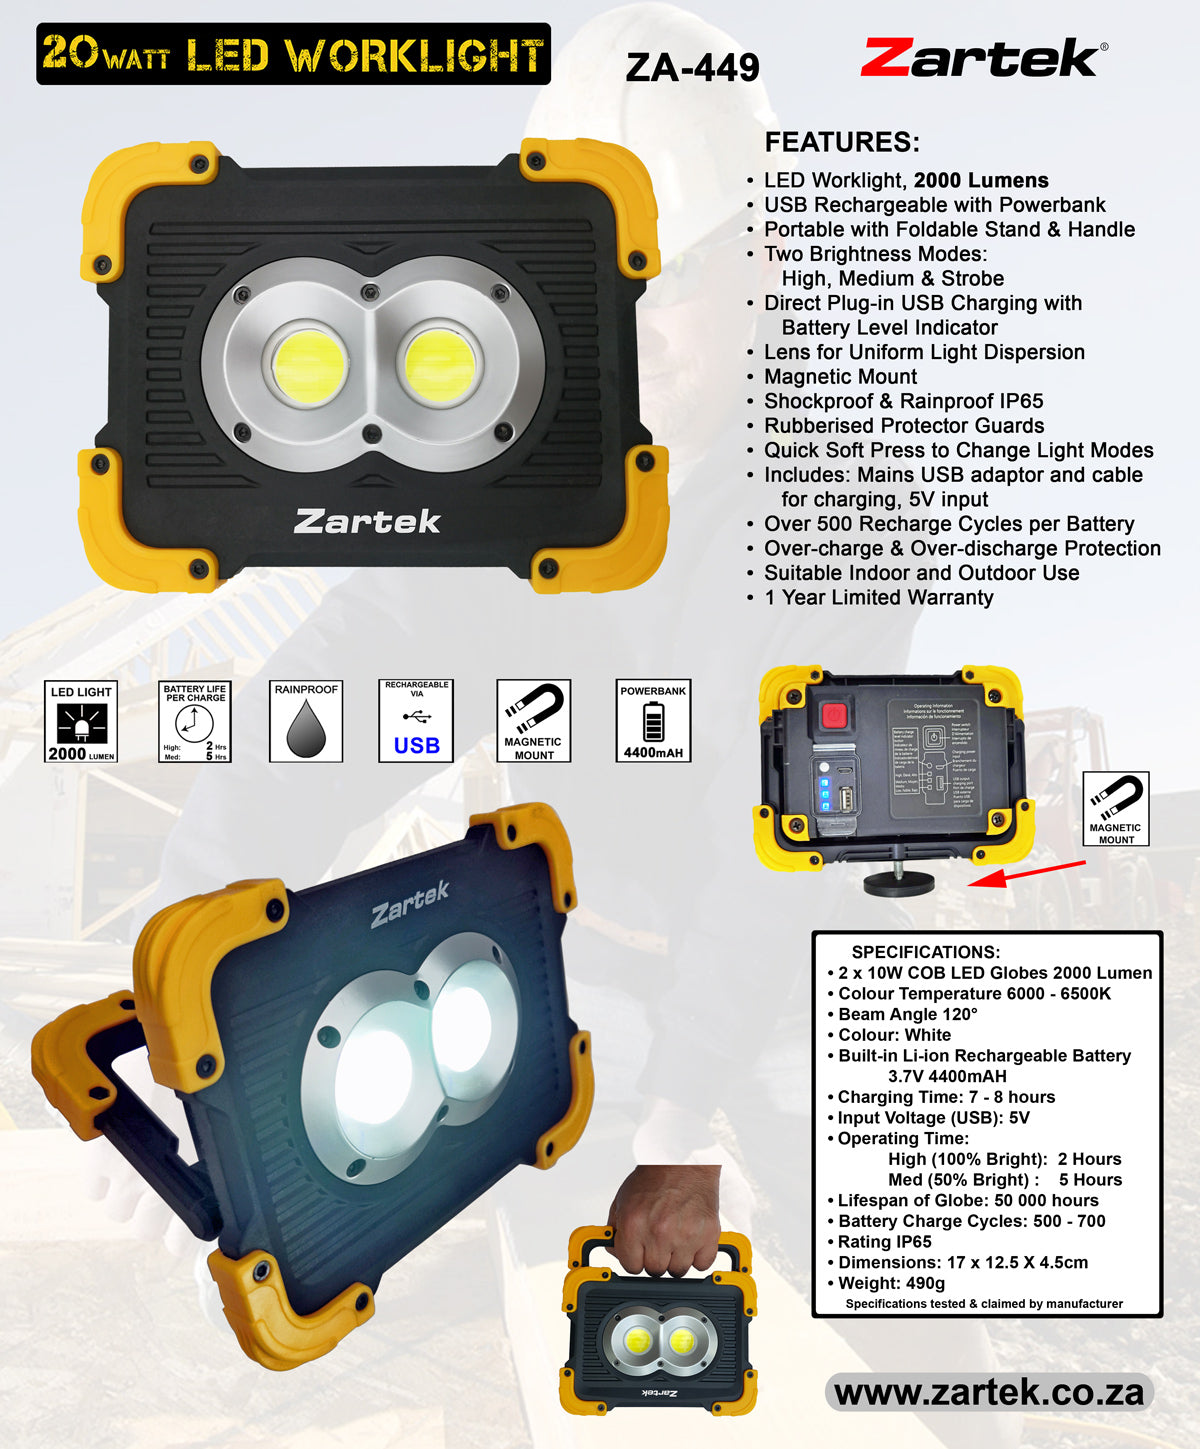 ZA-449 USB Rechargeable LED Worklight 20 Watt with Powerbank